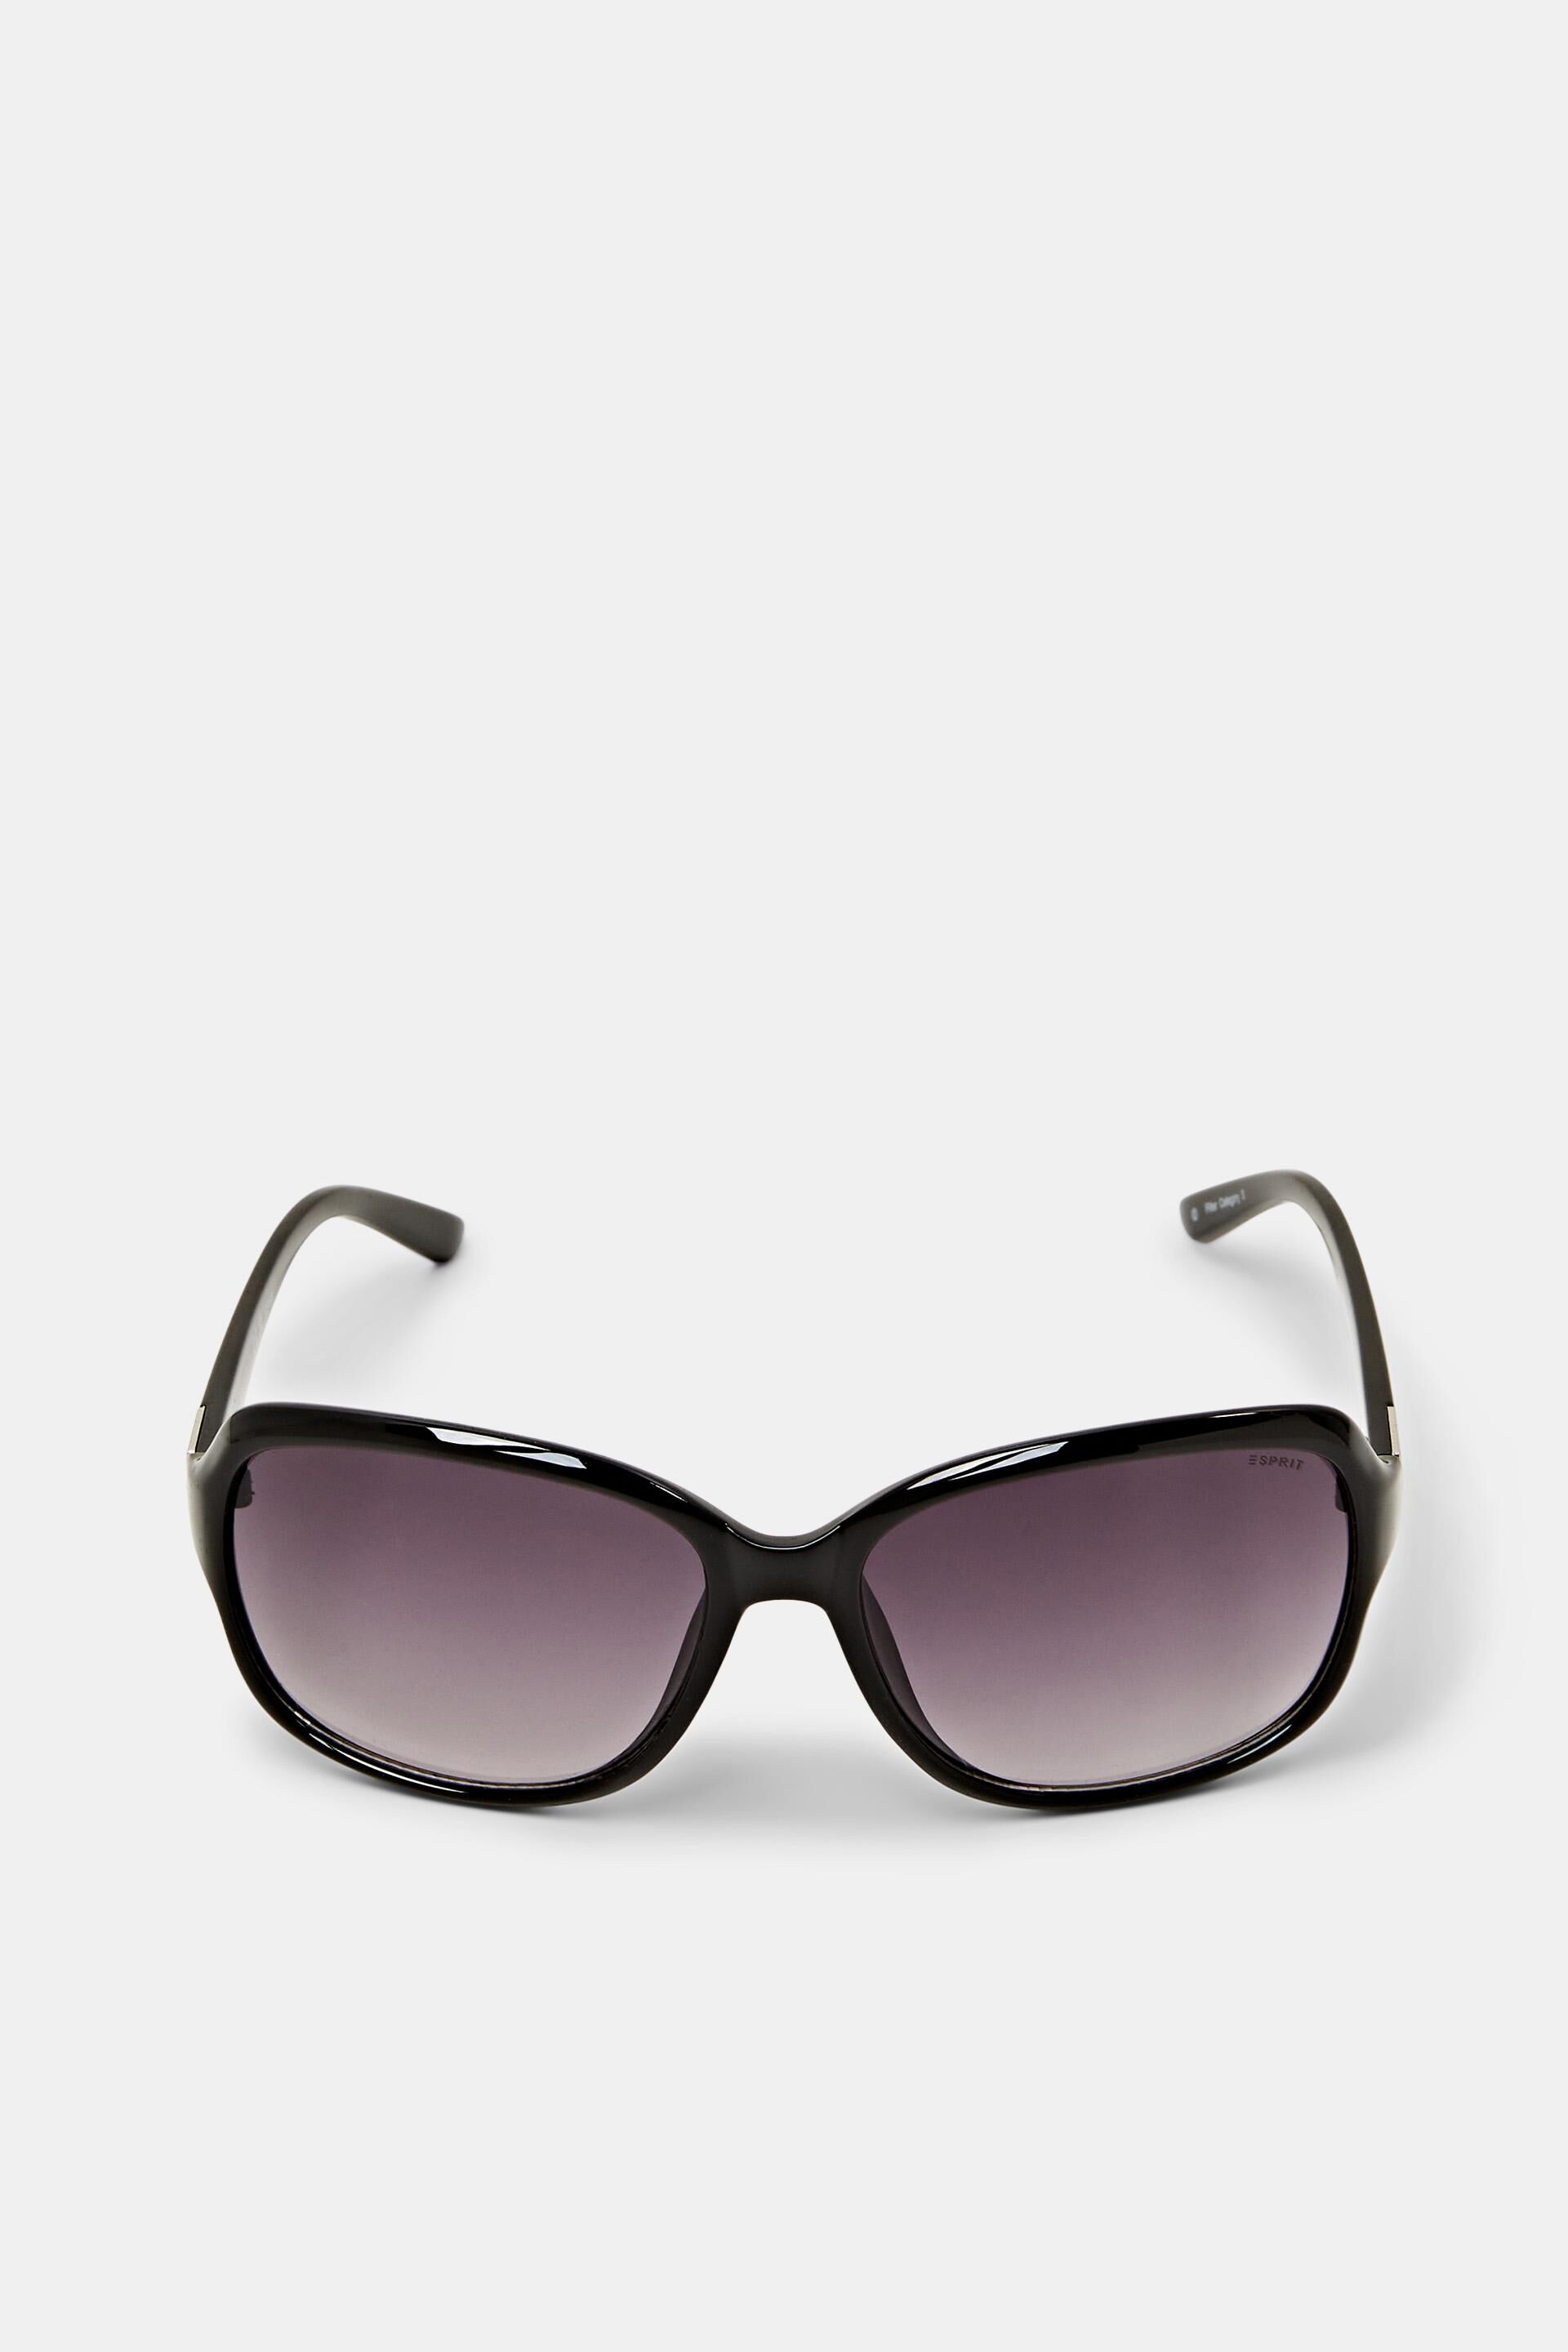 Esprit with a Sunglasses design timeless